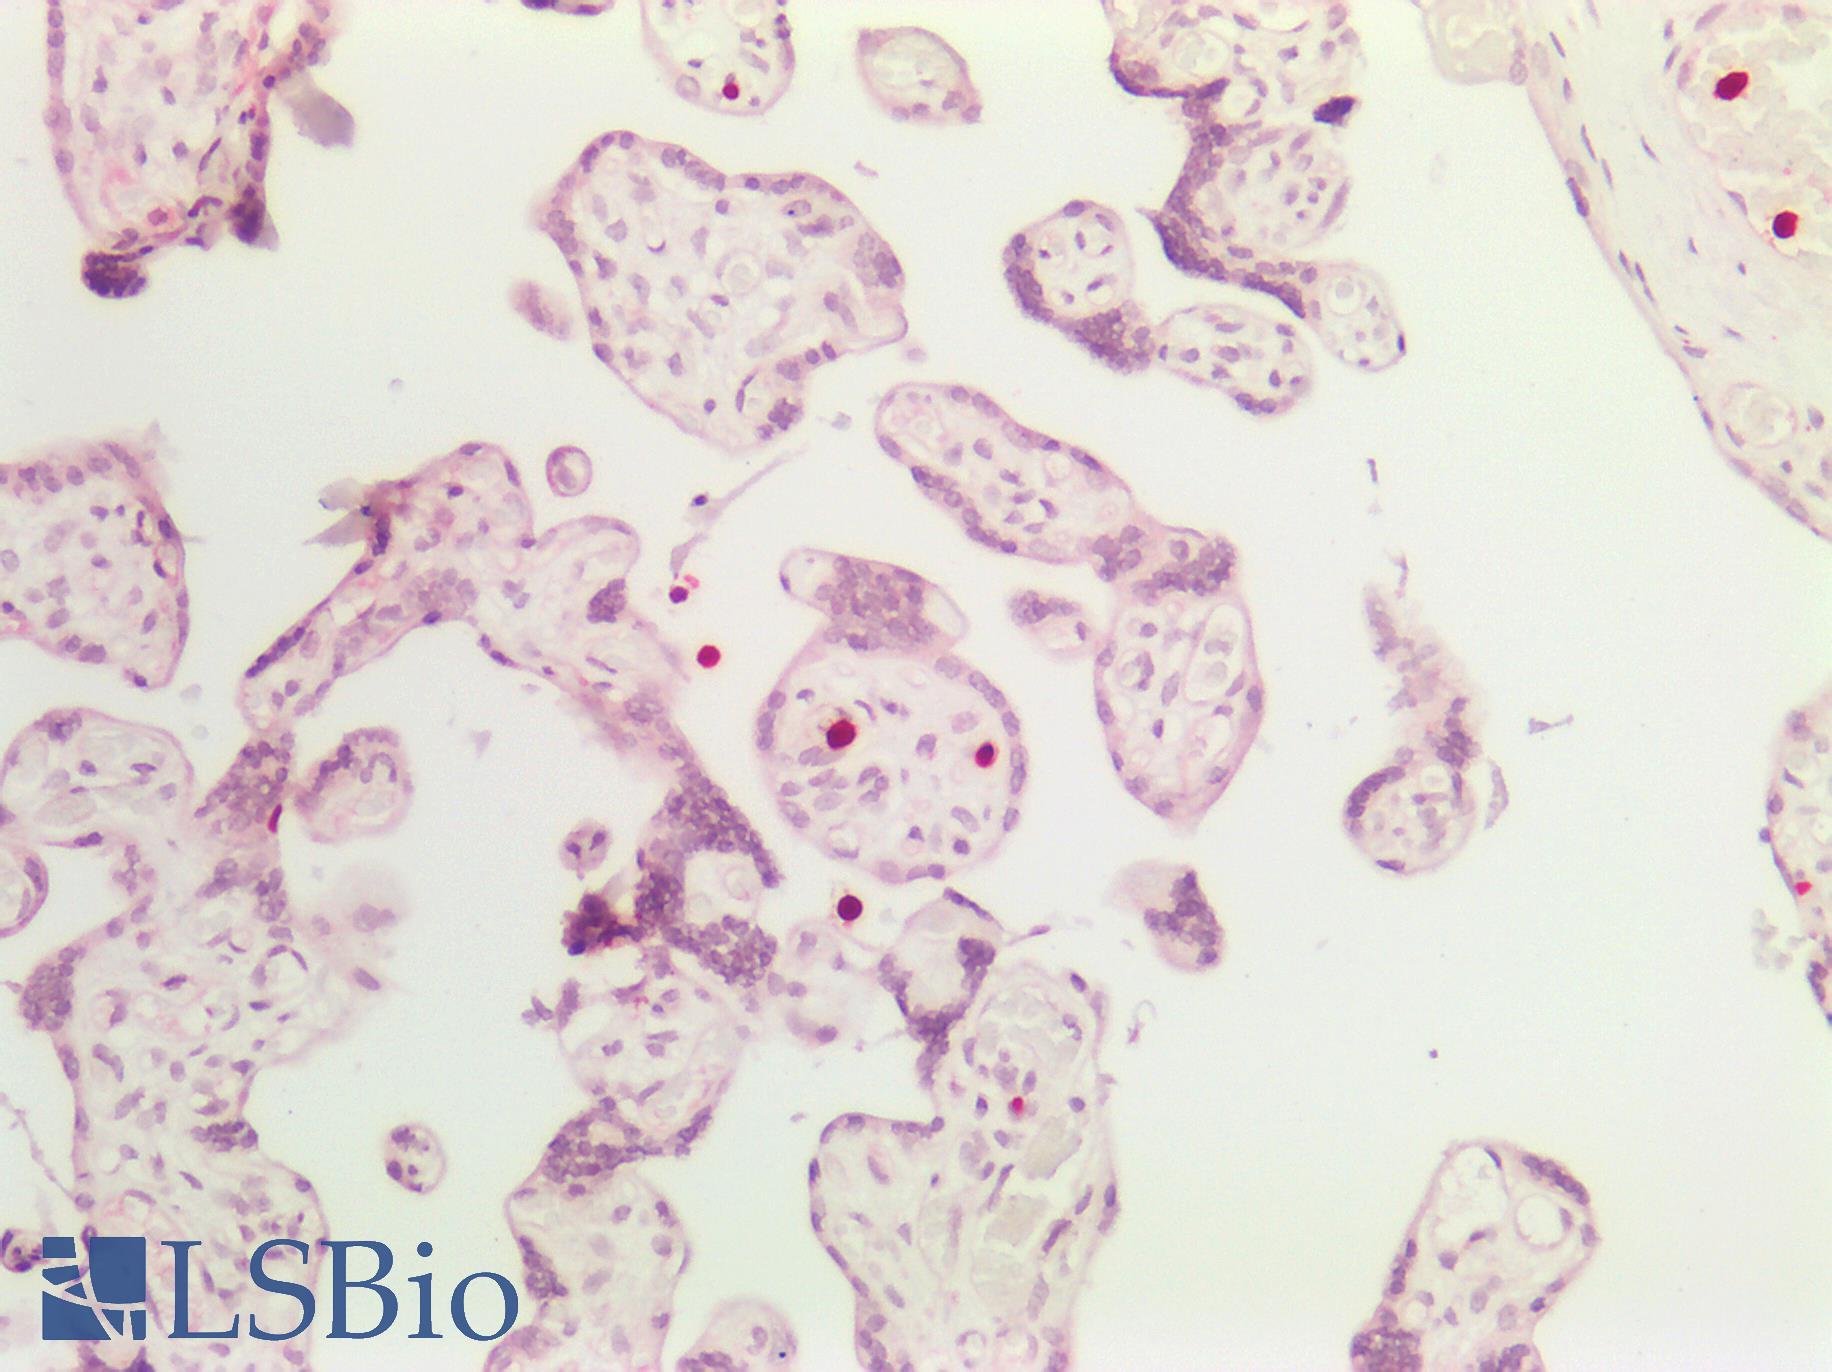 EIF4EBP1 / 4EBP1 Antibody - Human Placenta: Formalin-Fixed, Paraffin-Embedded (FFPE)